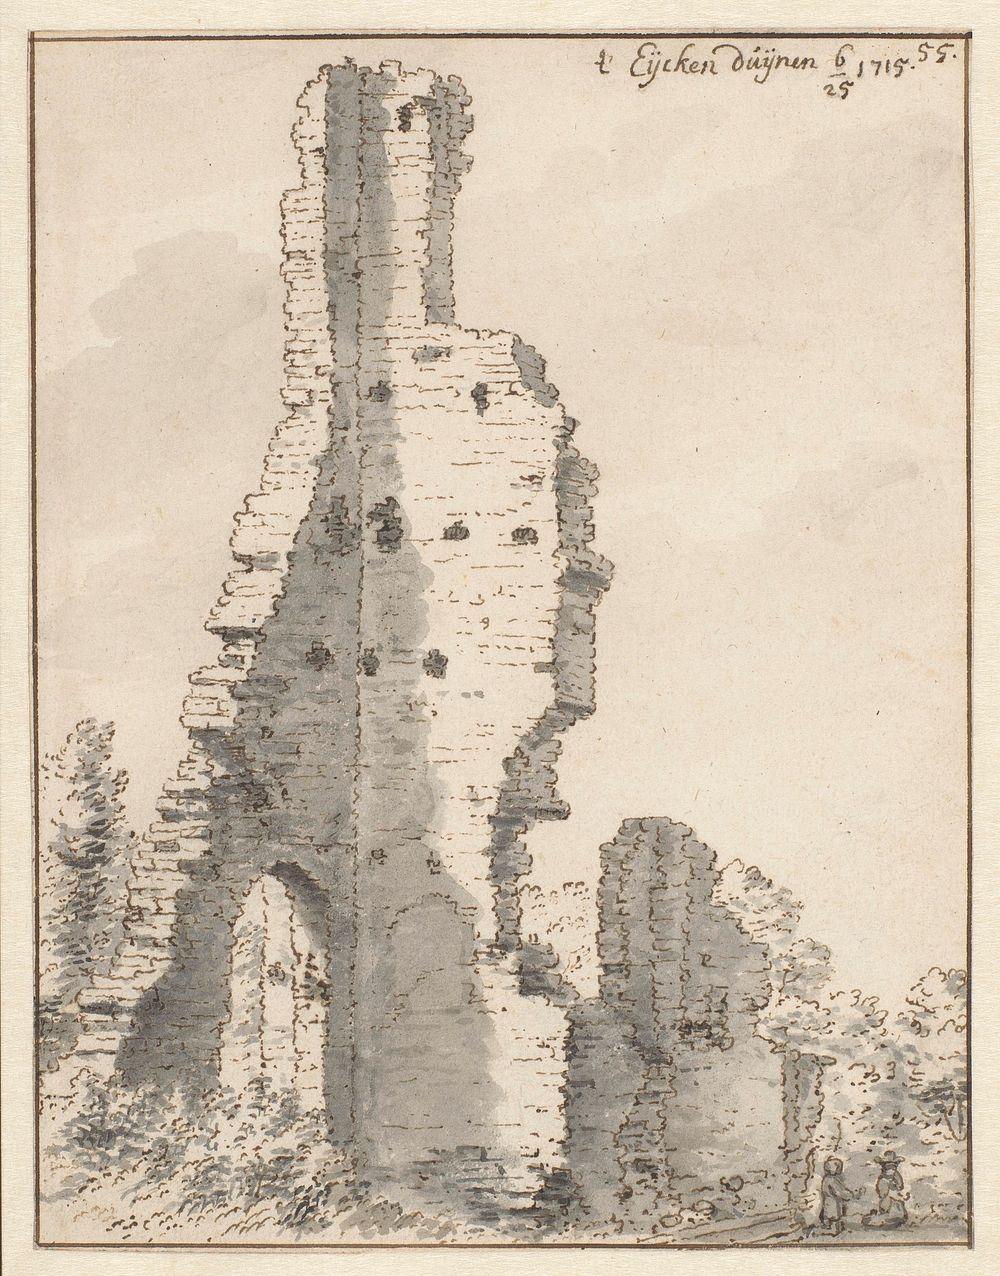 The Ruin of the Church of Eik en Duinen near The Hague (1715) by Valentijn Klotz